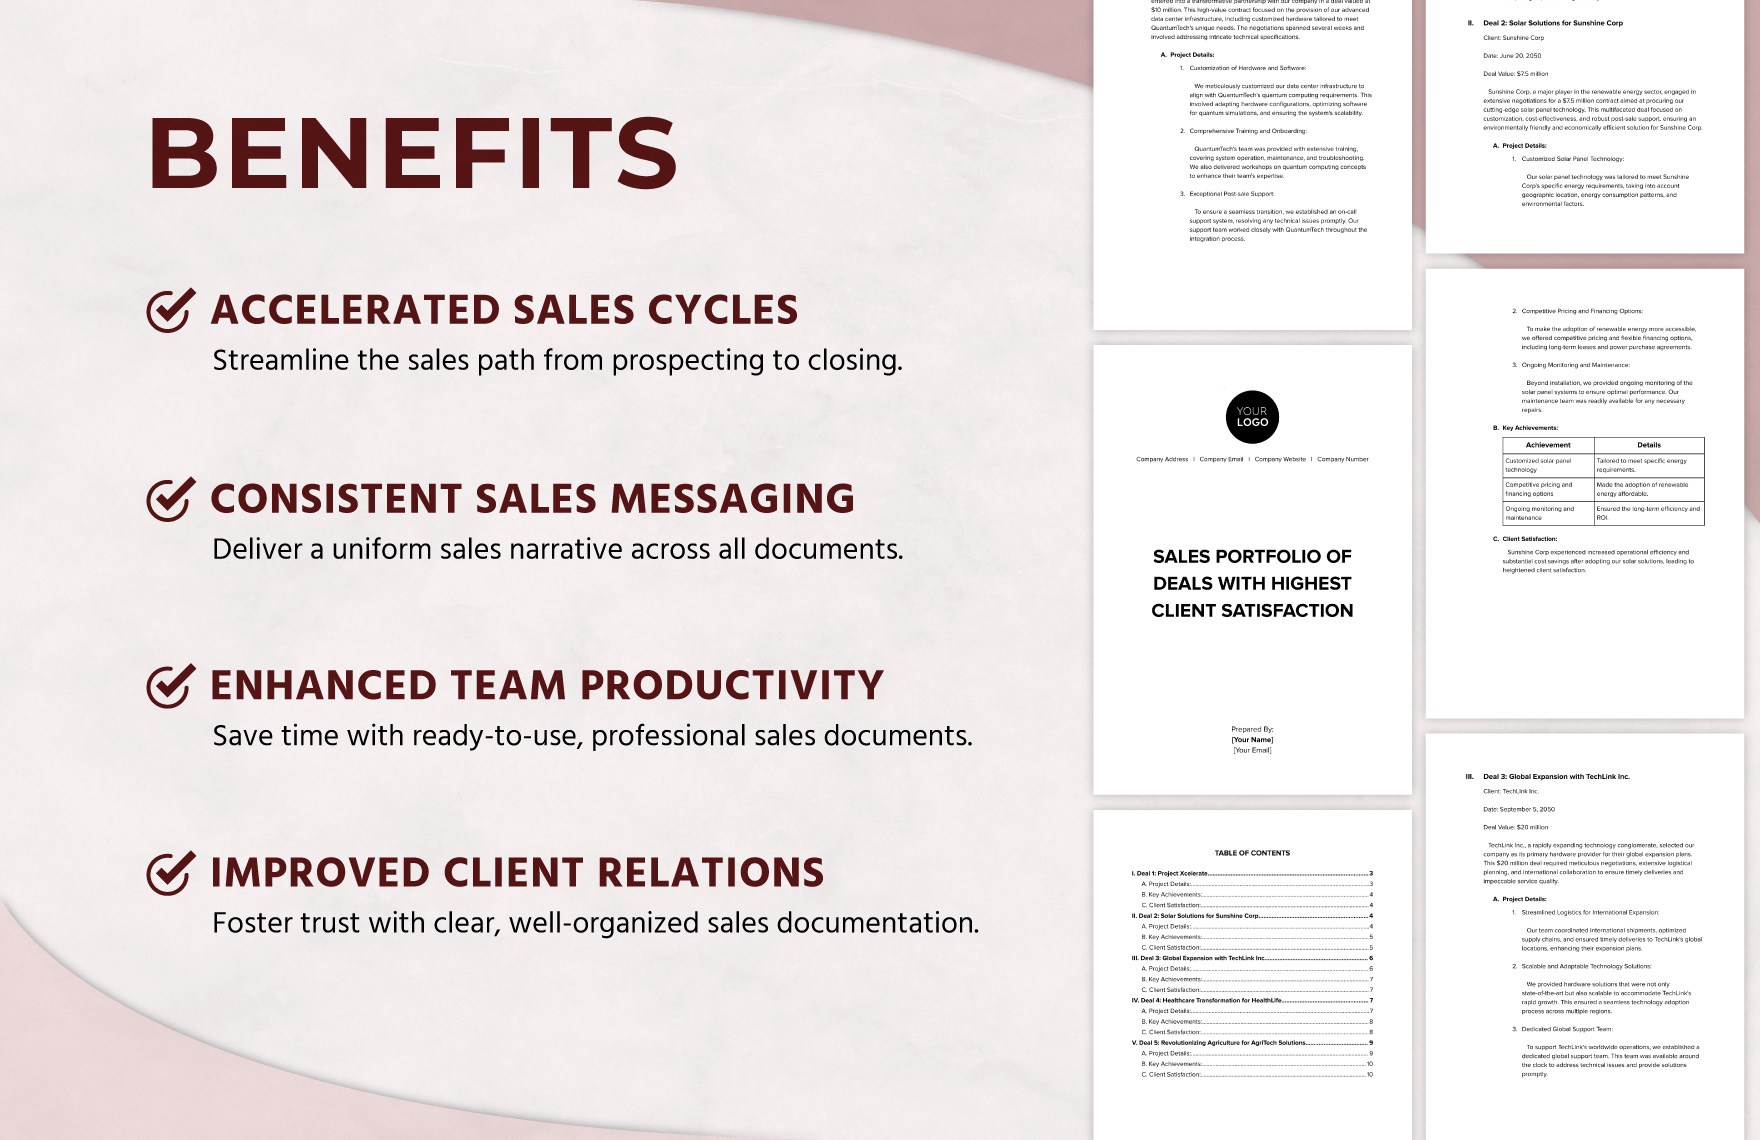 Sales Portfolio of Deals with Highest Client Satisfaction Template